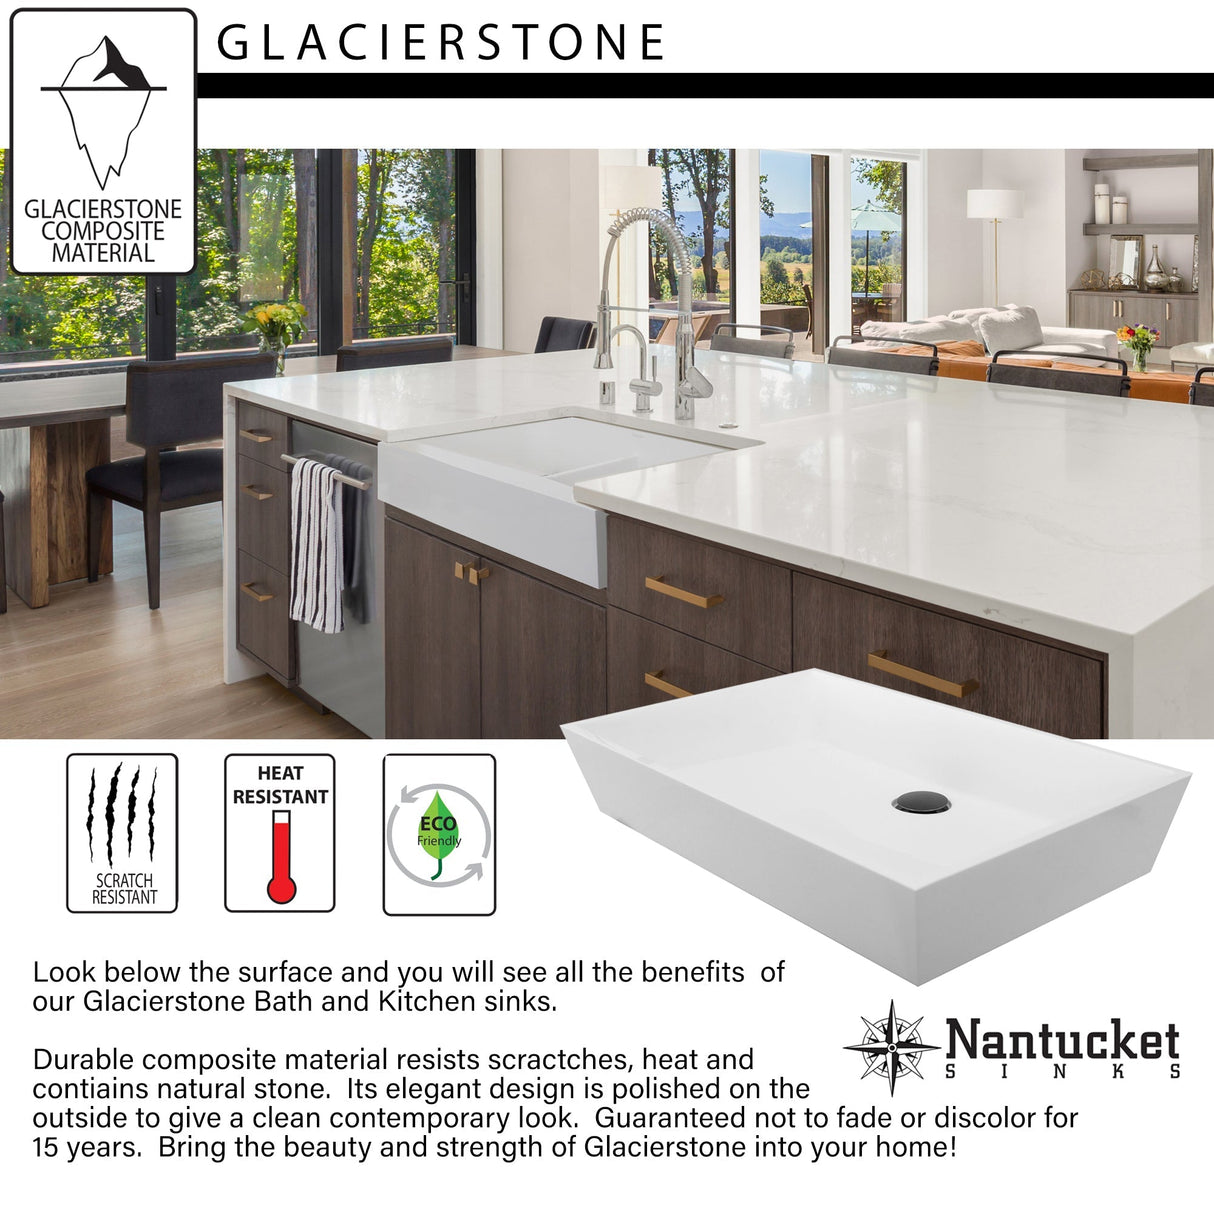 Nantucket Sinks Retrofit Glacierstone Single Bowl EZApron Kitchen Sink